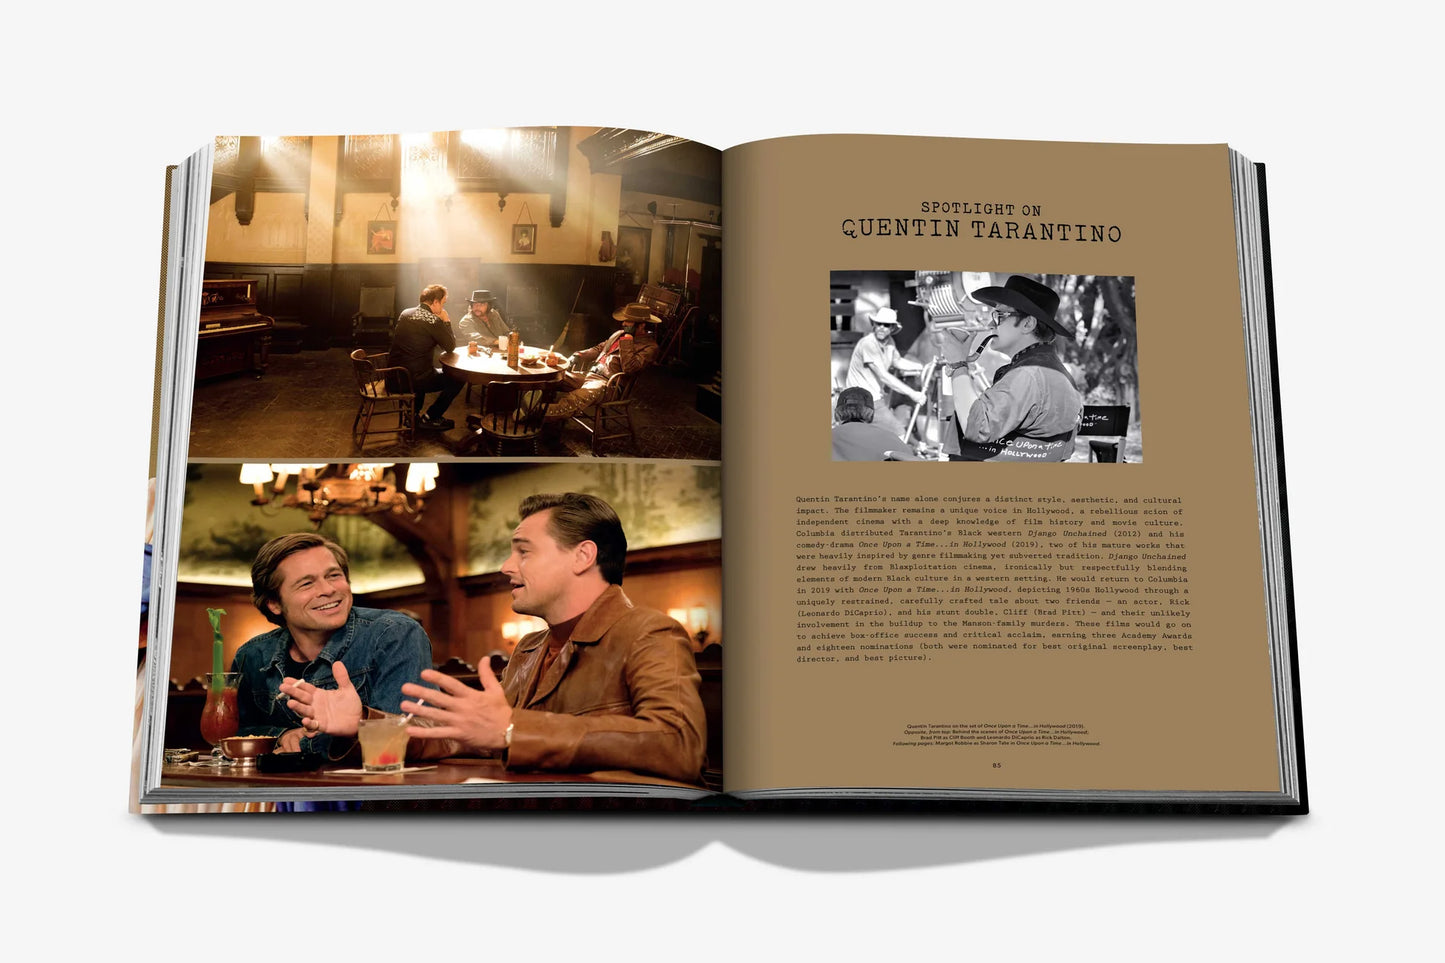 Livre Columbia Pictures: 100 Years Of Cinema